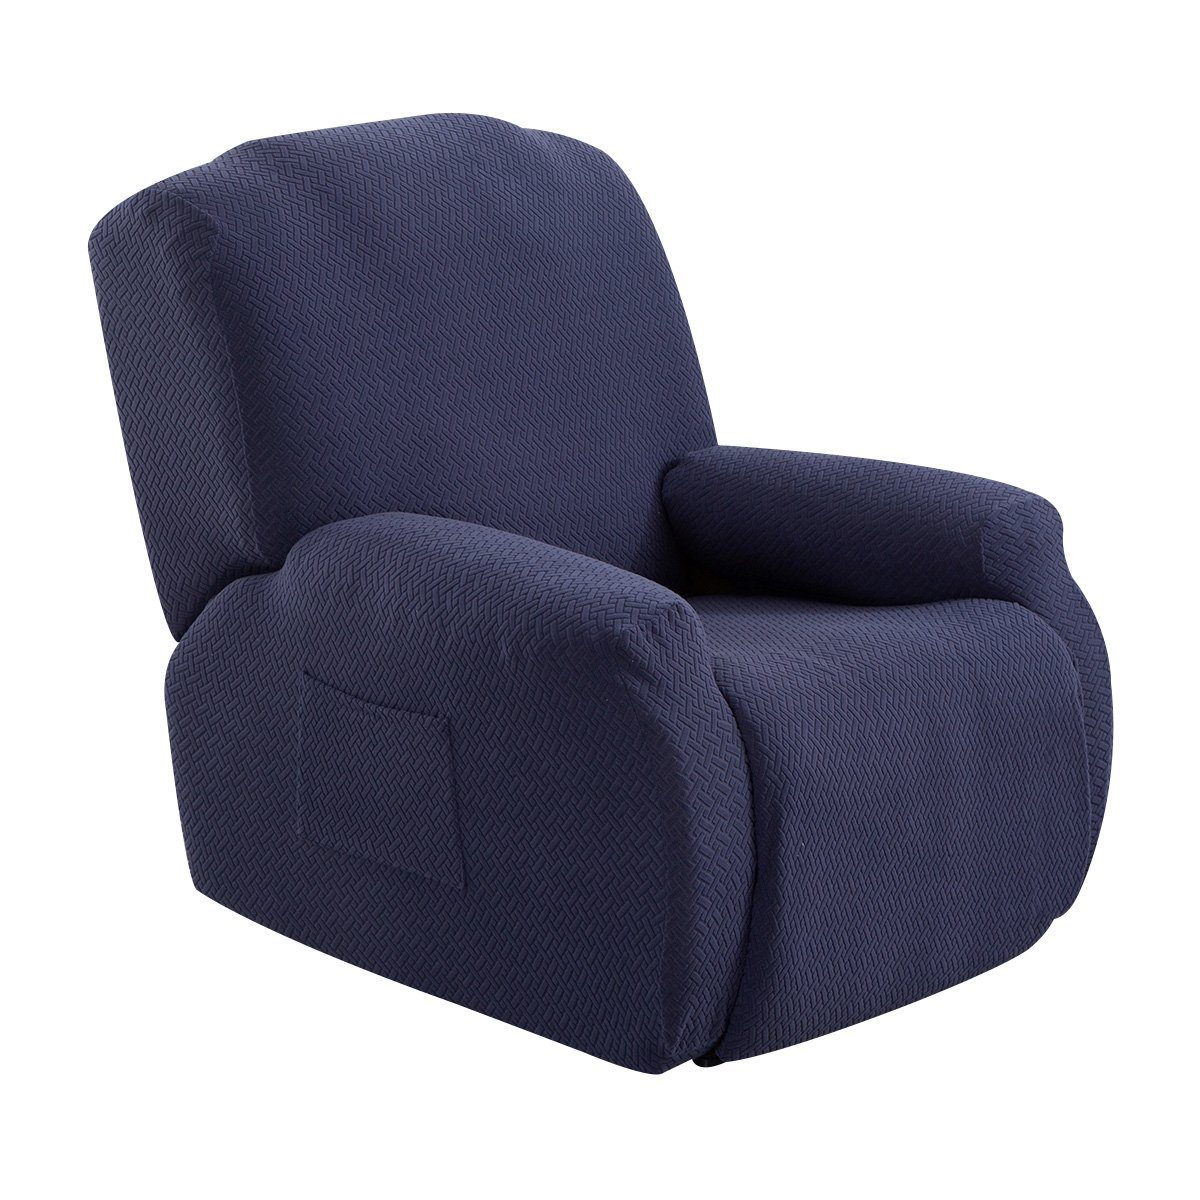 Sesselhusse Sesselbezug Stretchhusse, Relaxsessel Komplett für Liege Sessel, Rosnek, mit Strukturoptik Blau